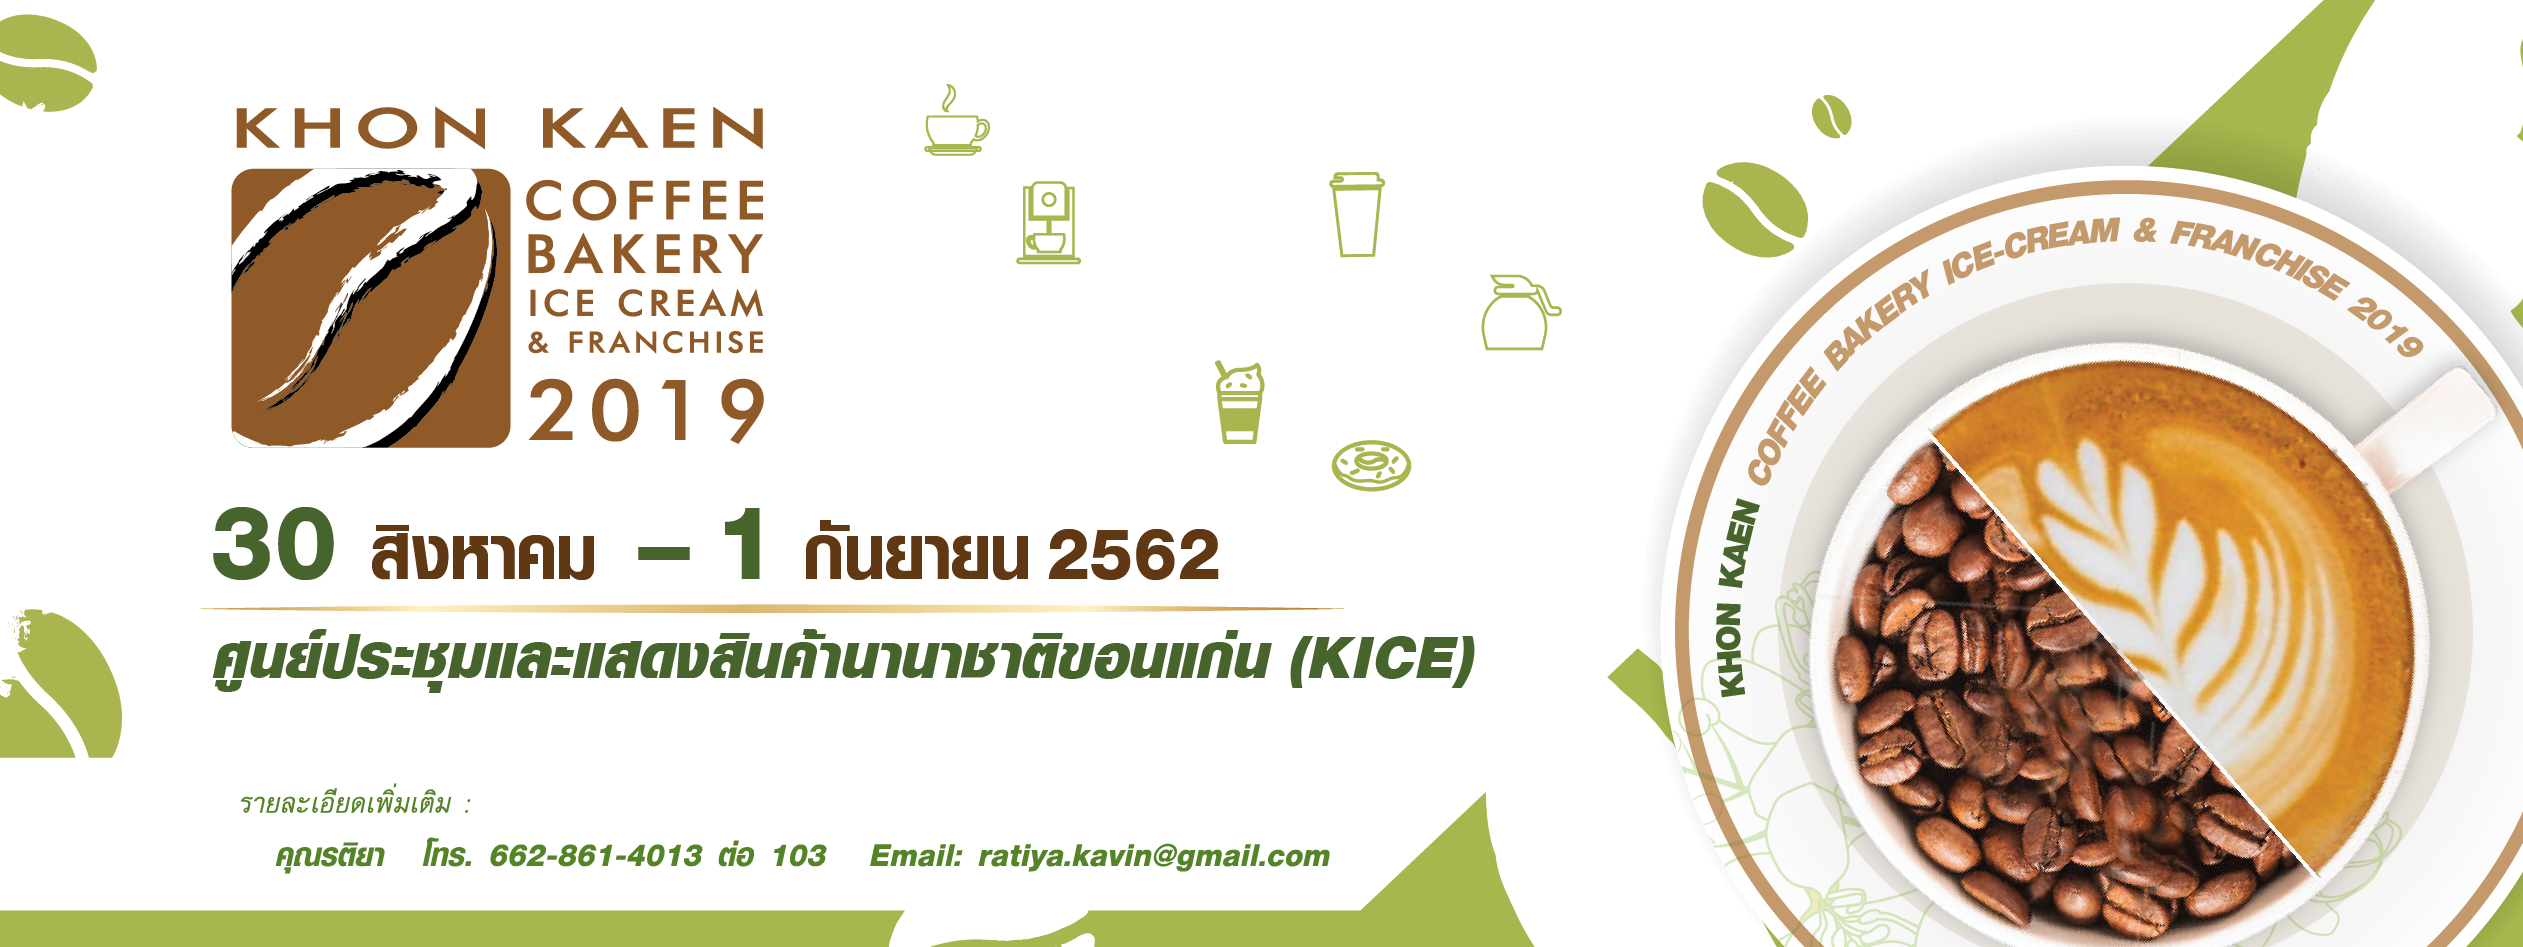 “Khon Kaen Coffee Bakery Ice-cream & Franchise” งานขอนแก่นกาแฟ เบเกอรี่ ไอศกรีมและแฟรนไชส์ ปีที่ 2 ใหญ่ที่สุดในภาคอีสาน